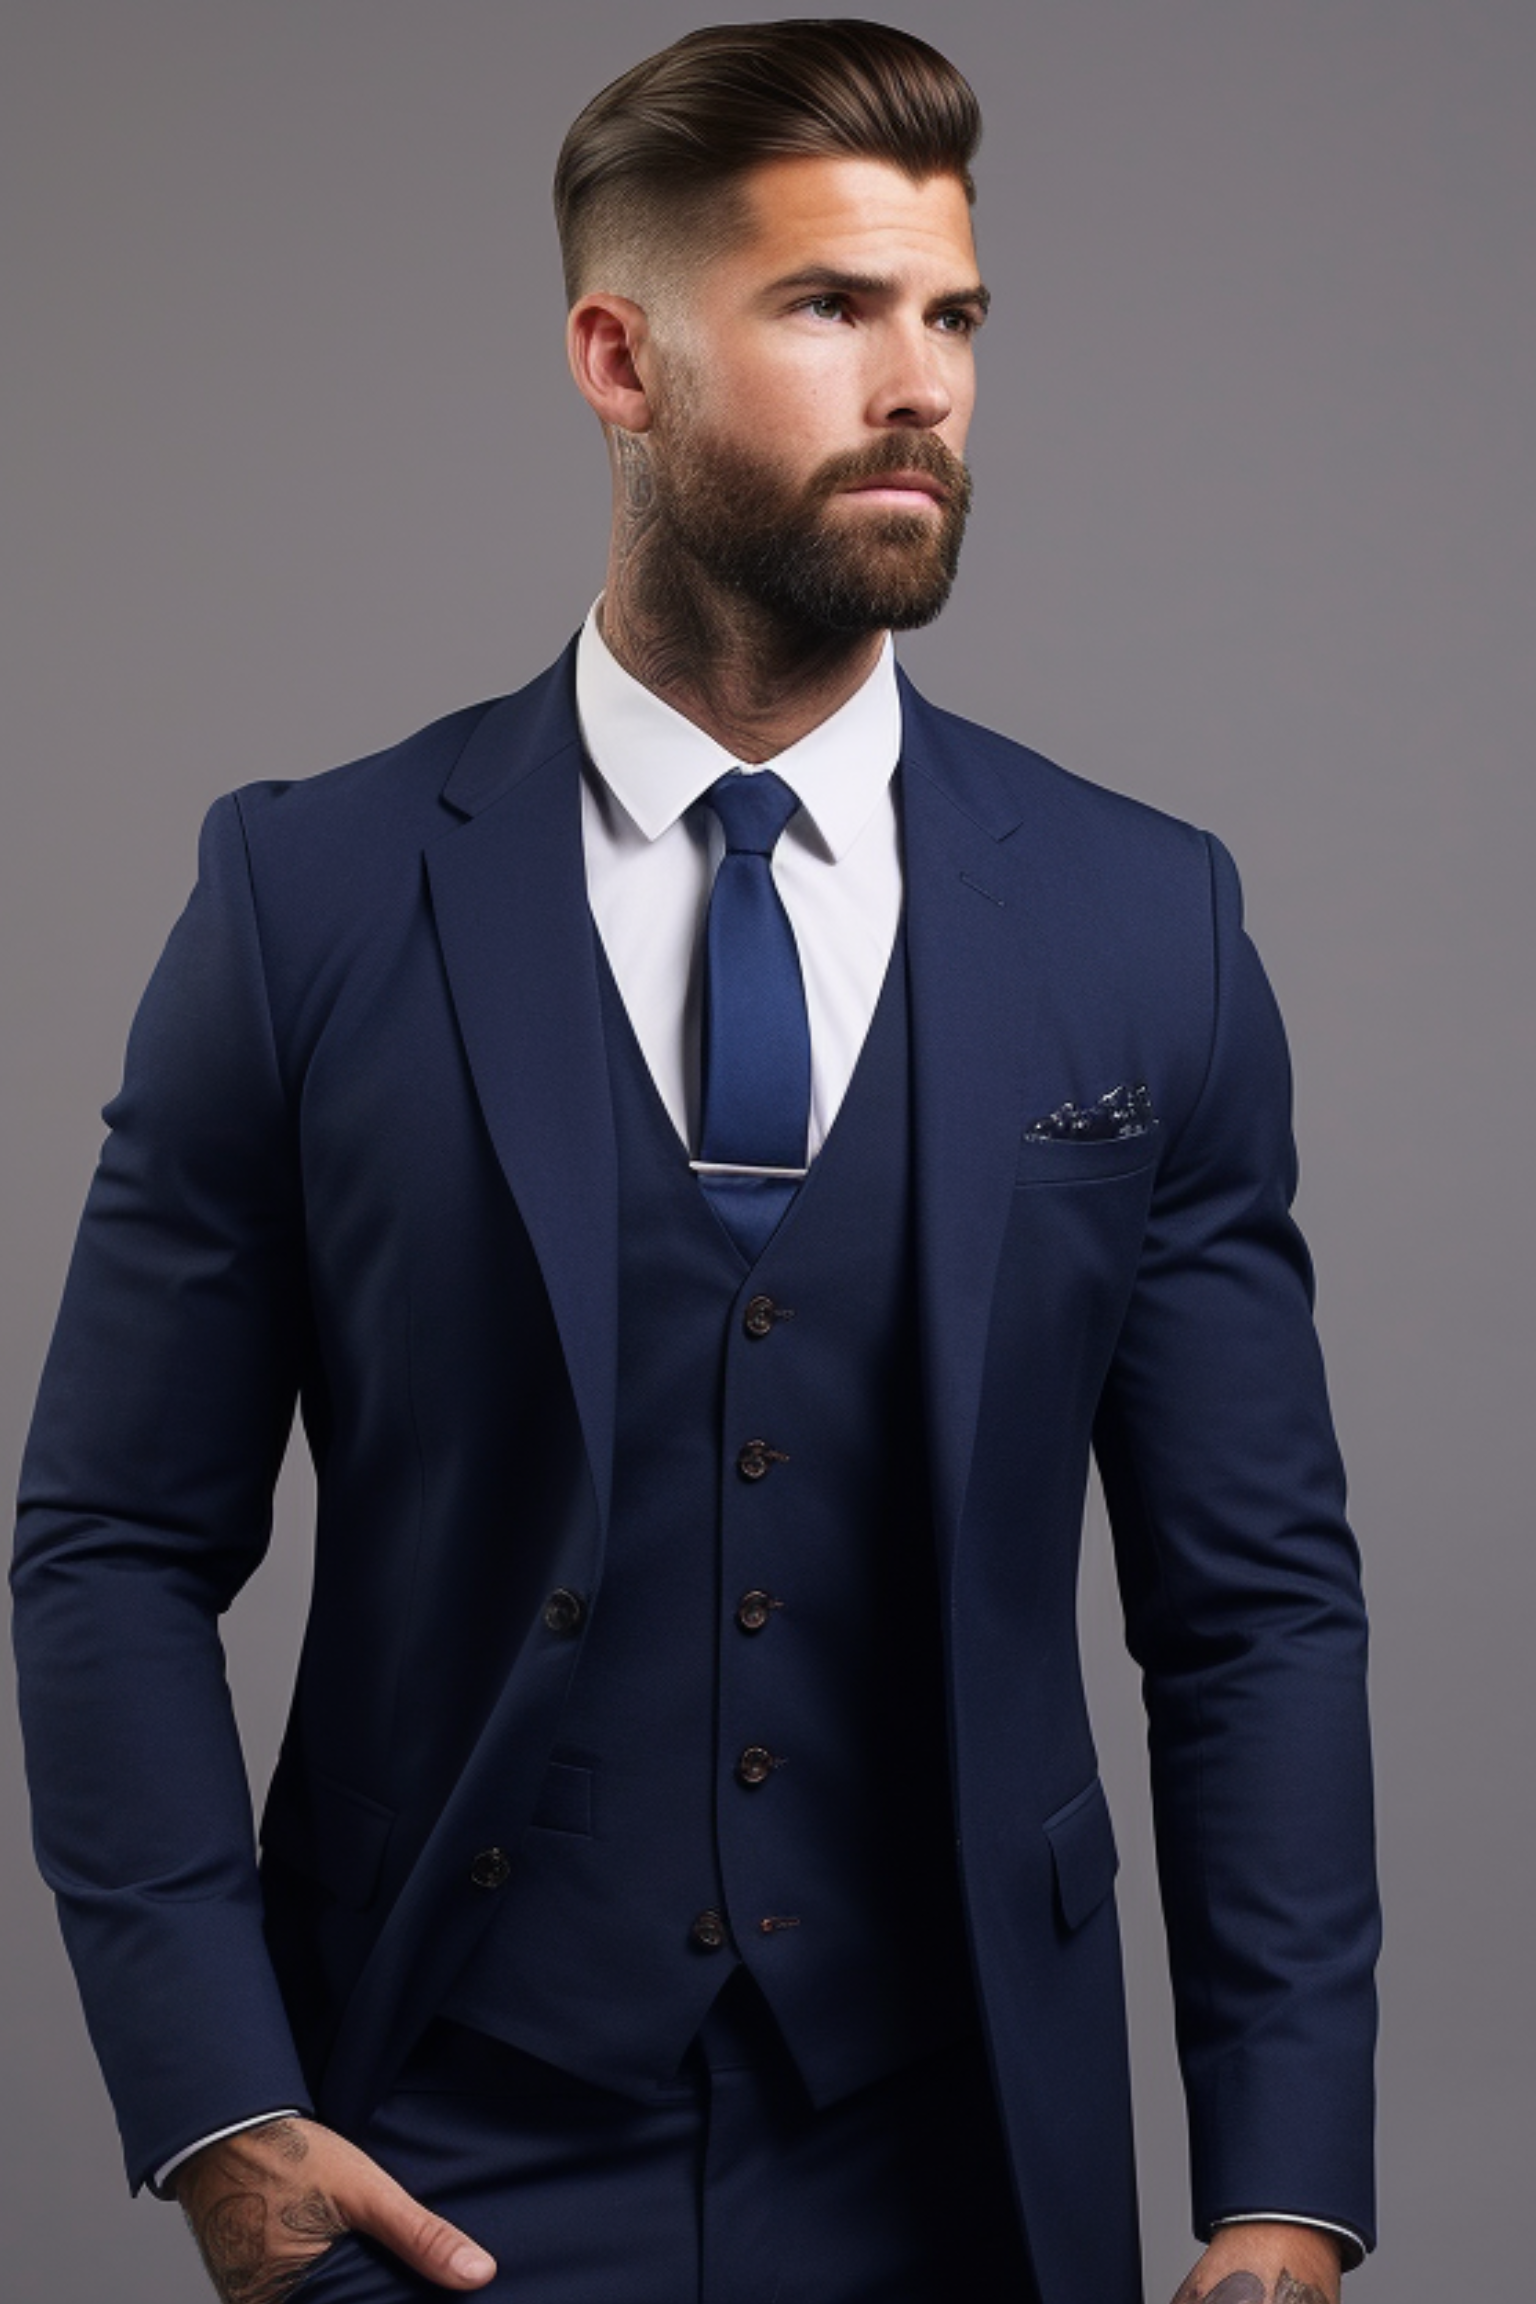 Classic Navy Blue Men's Three-Piece Notch Lapel Suit - Tailored